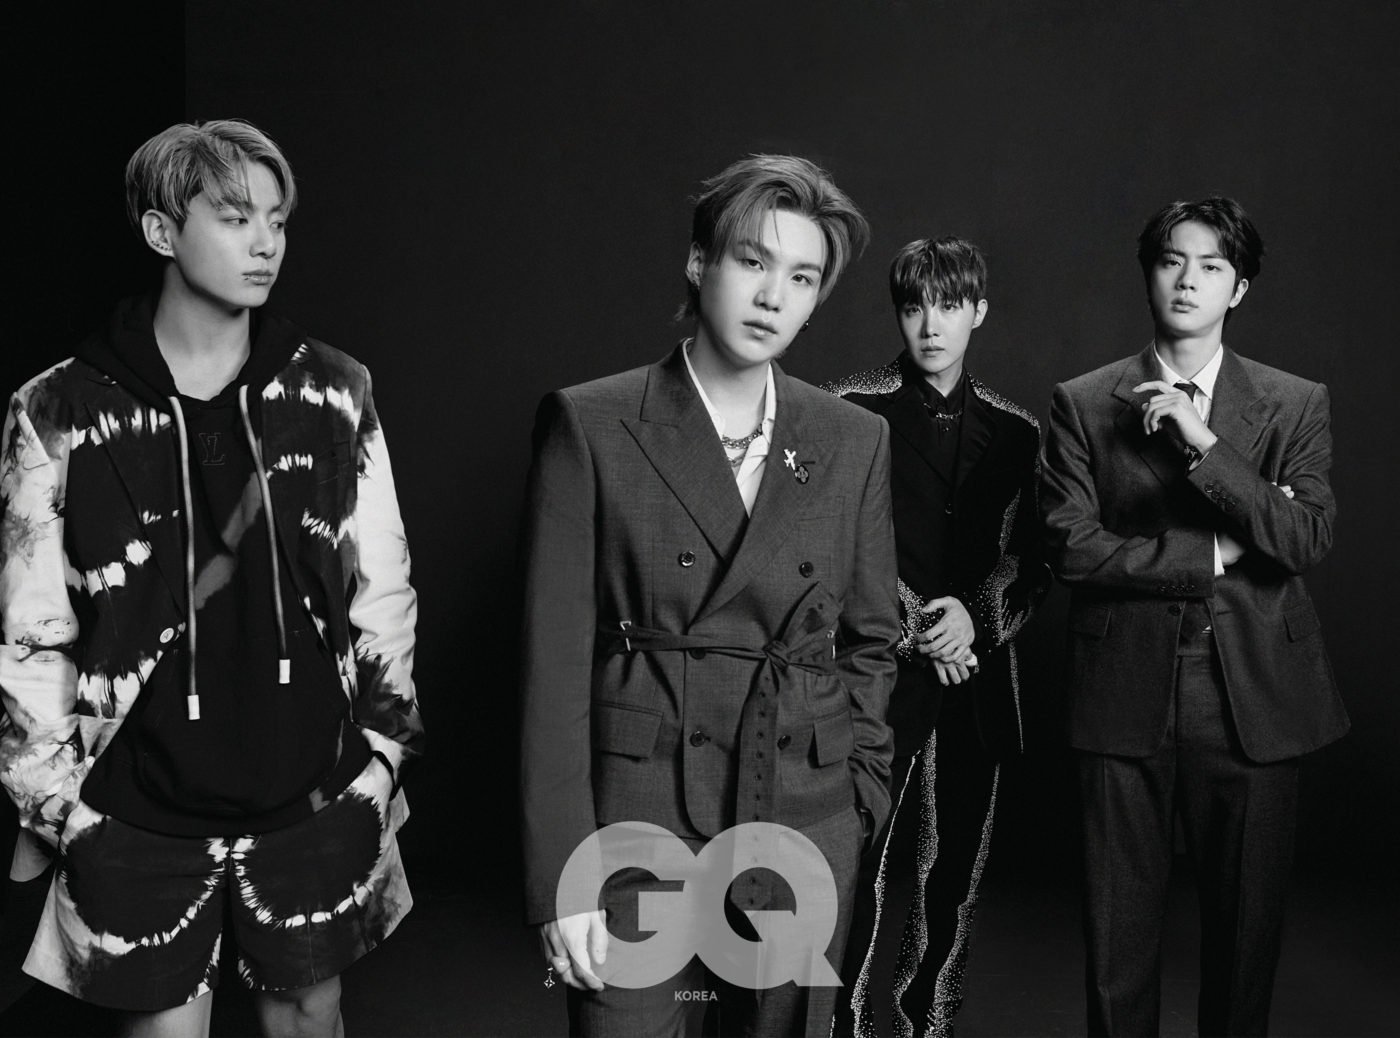 VOGUE KOREA & GQ KOREA - JHOPE [ Louis Vuitton ] #JHOPE #BTS